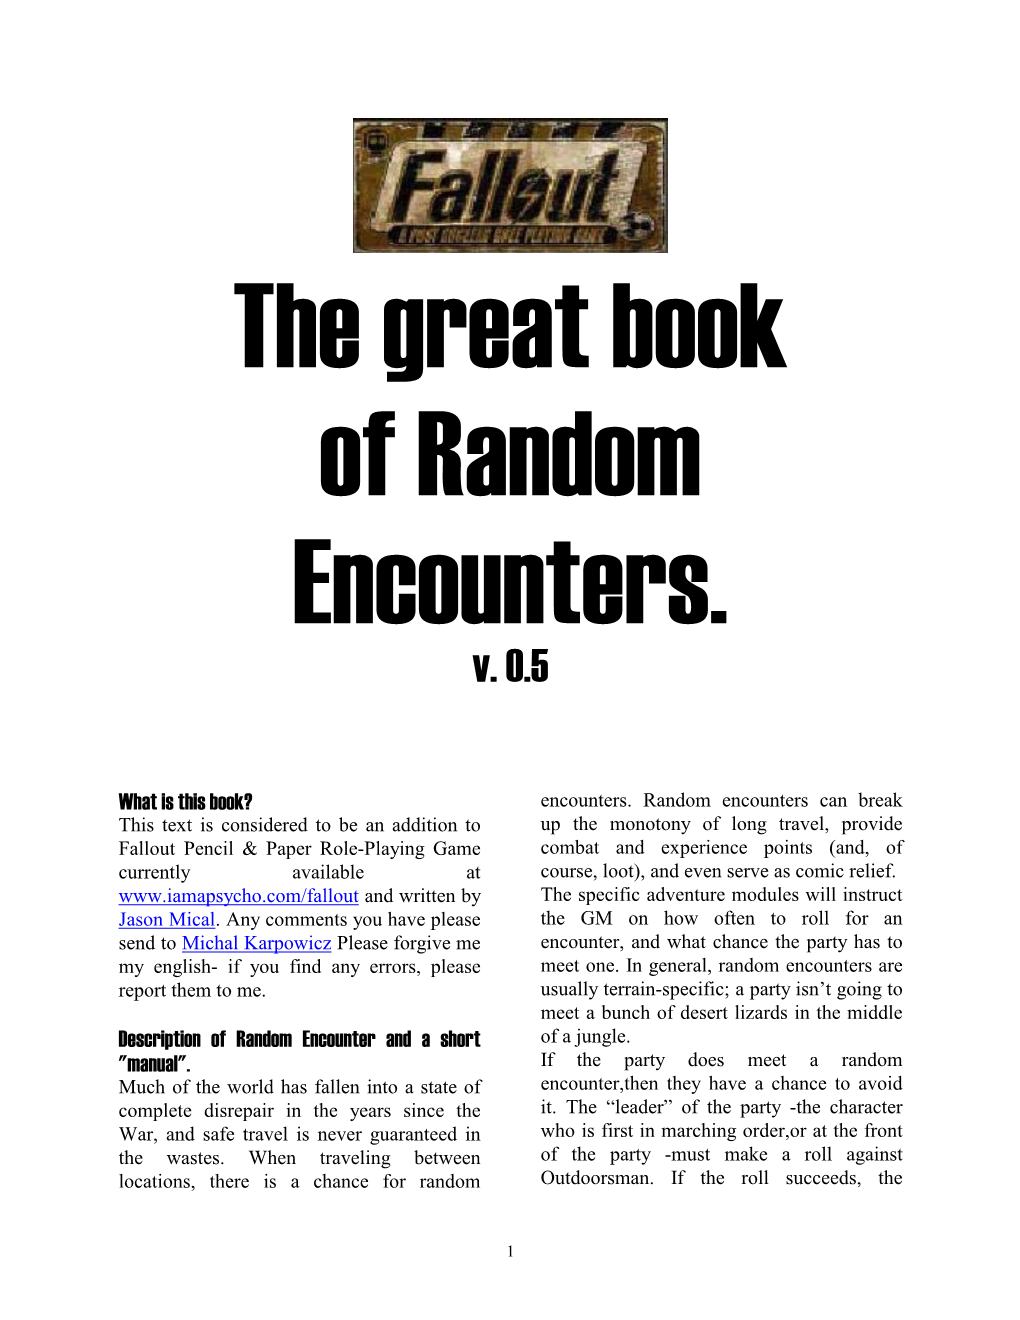 The Great Book of Random Encounters. V